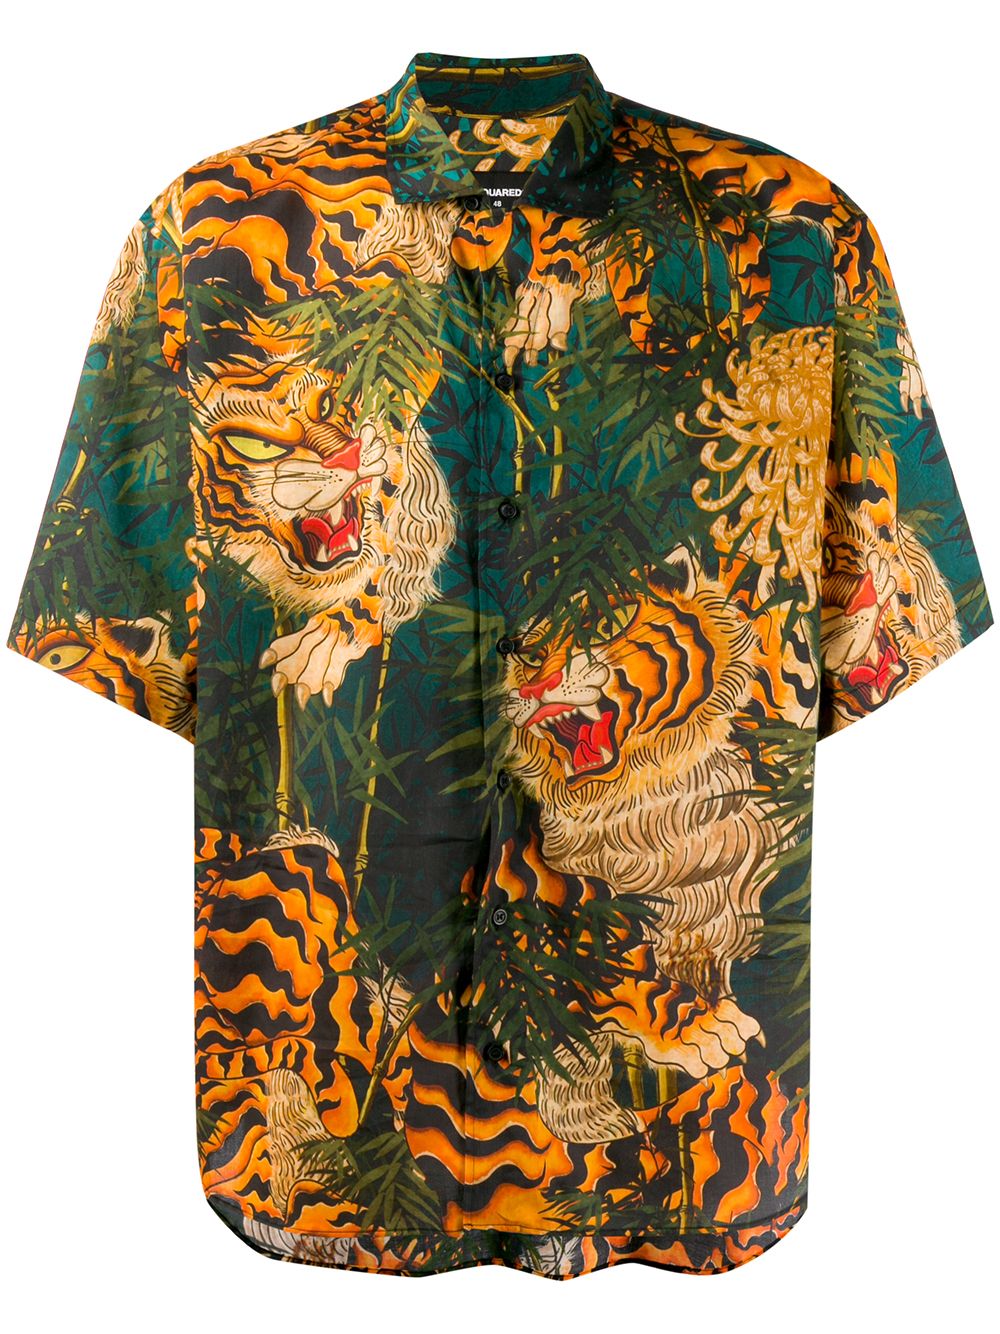 dsquared t shirt tiger